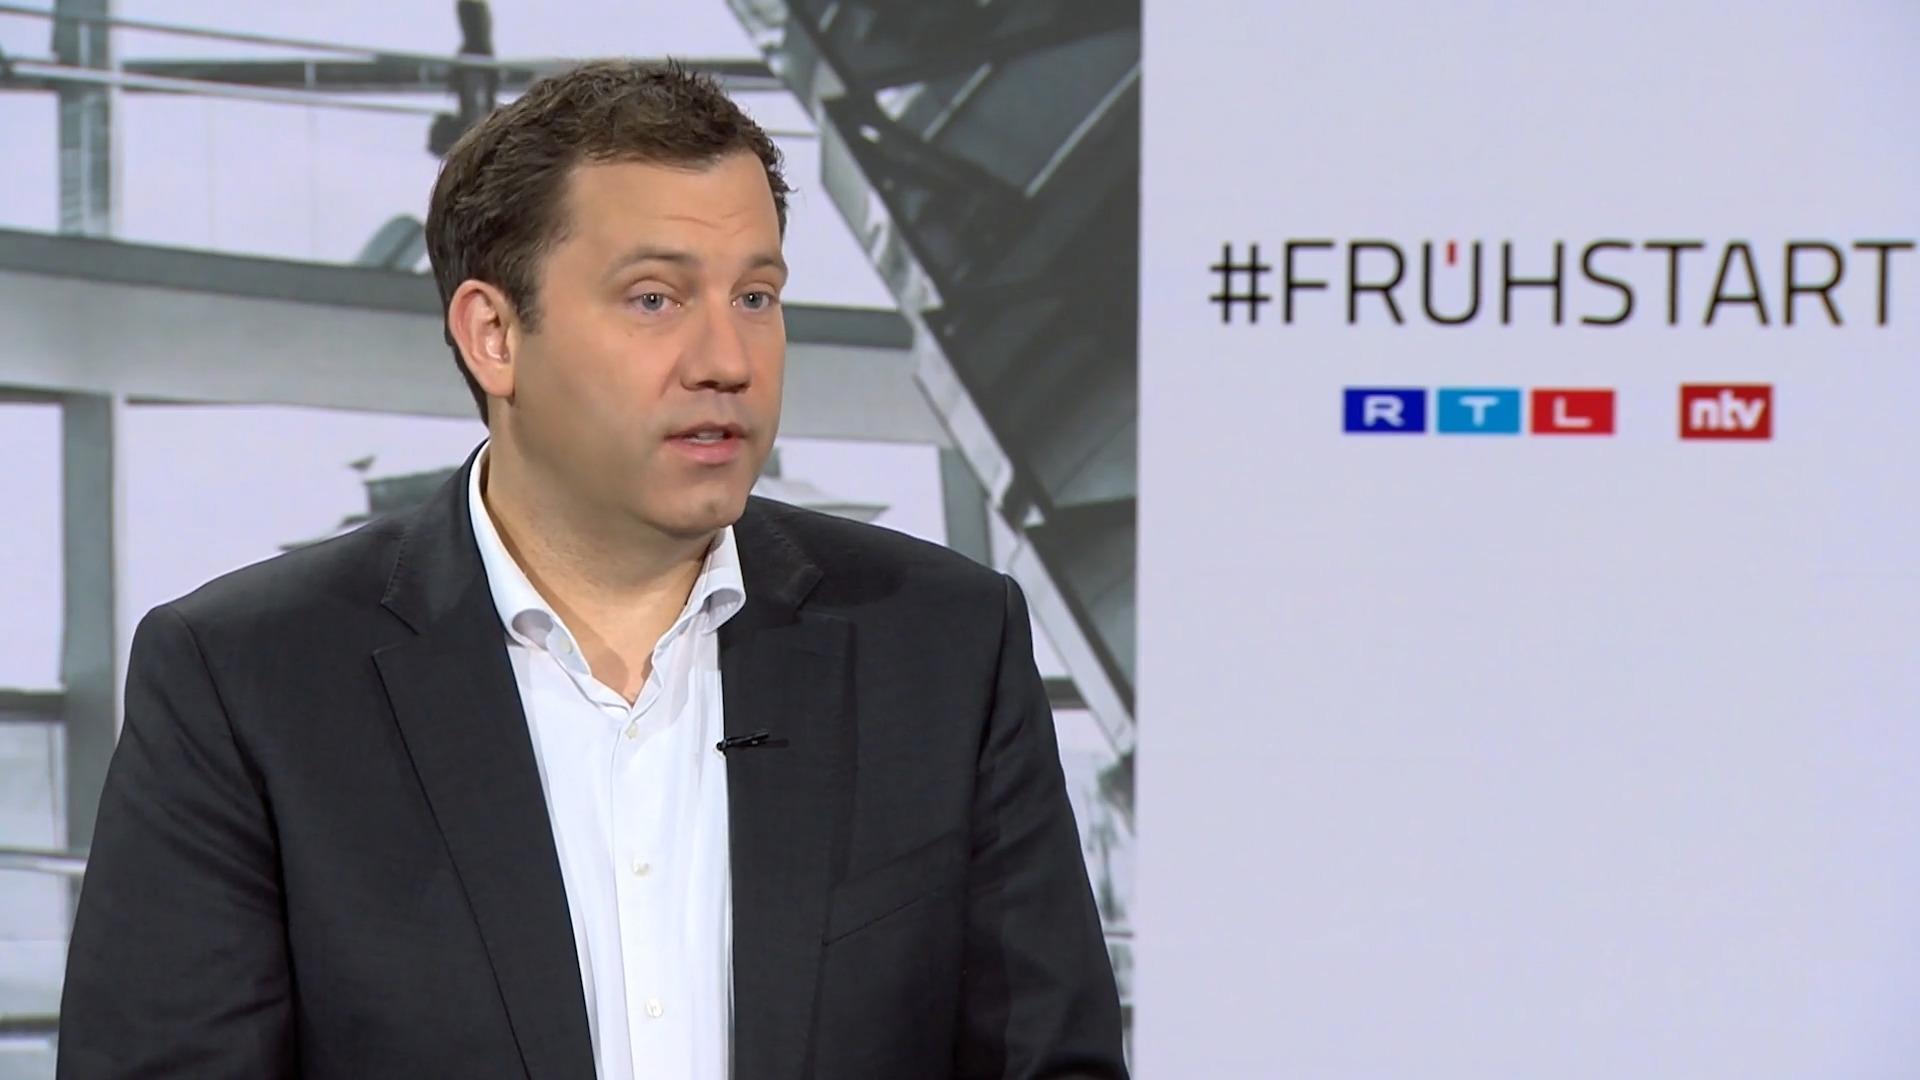 Klingbeil: "Die FIFA macht unseren Fußball kaputt" RTL/ntv Frühstart